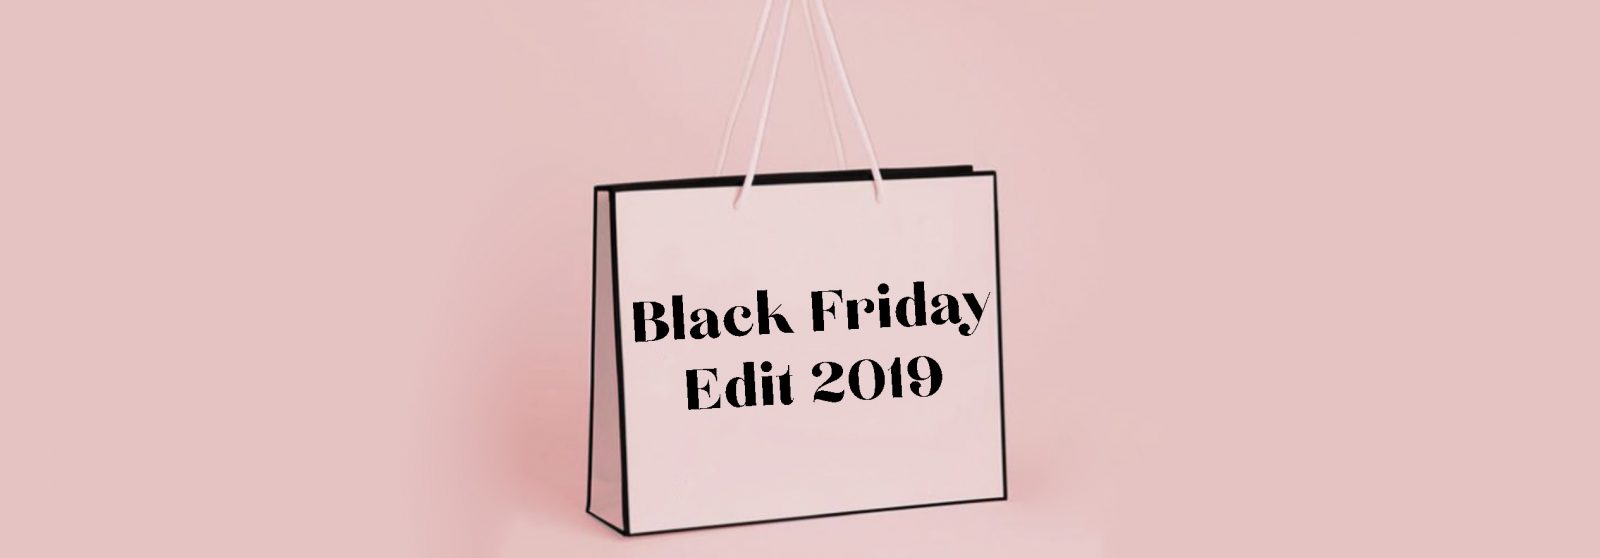 The best John Lewis deals this Black Friday 2019 - Fashion Mumblr